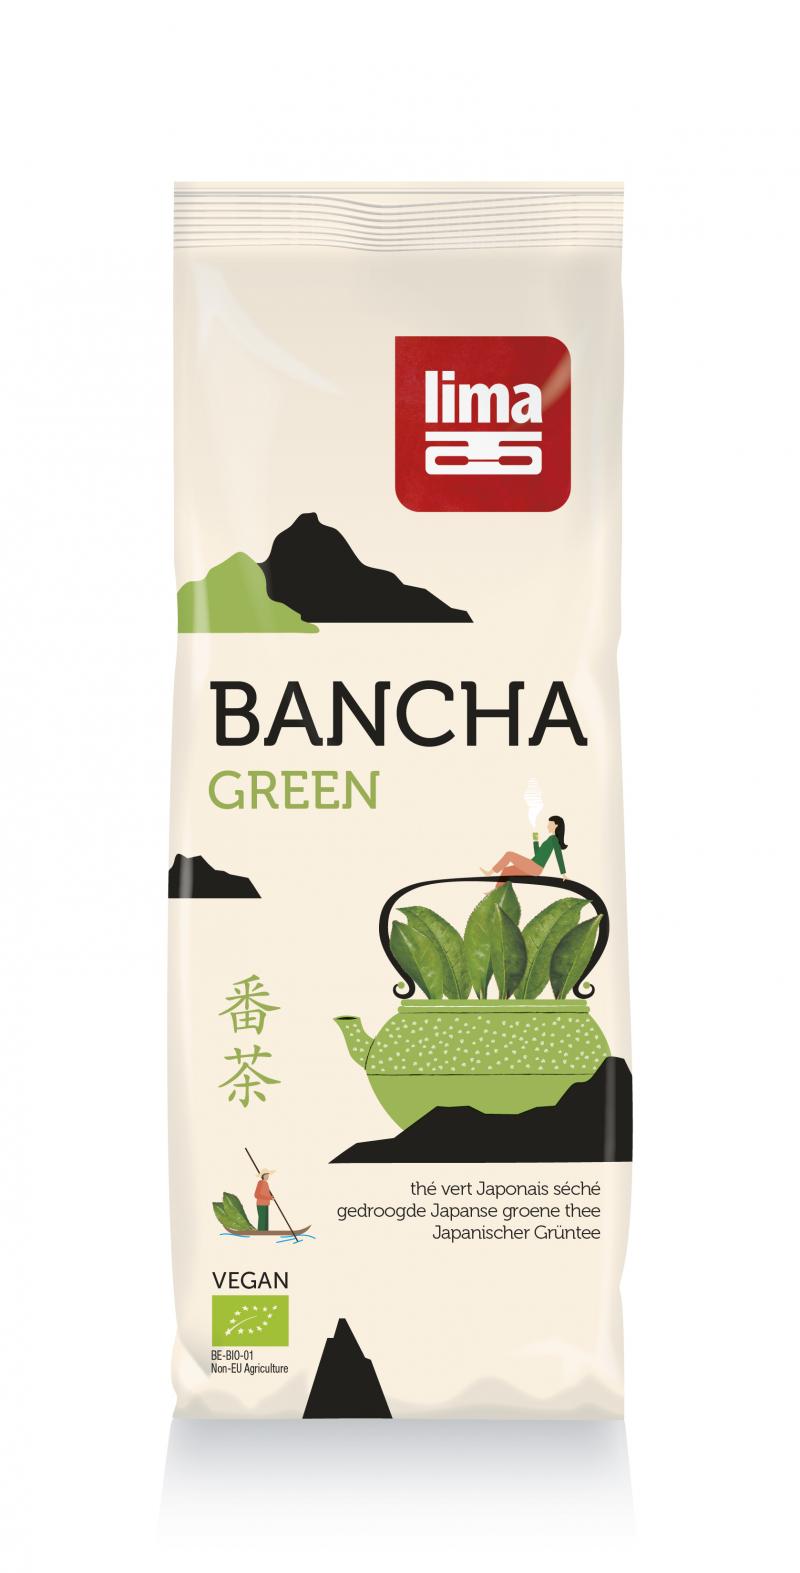 Lima Green bancha thé vert japonais séché bio 100g